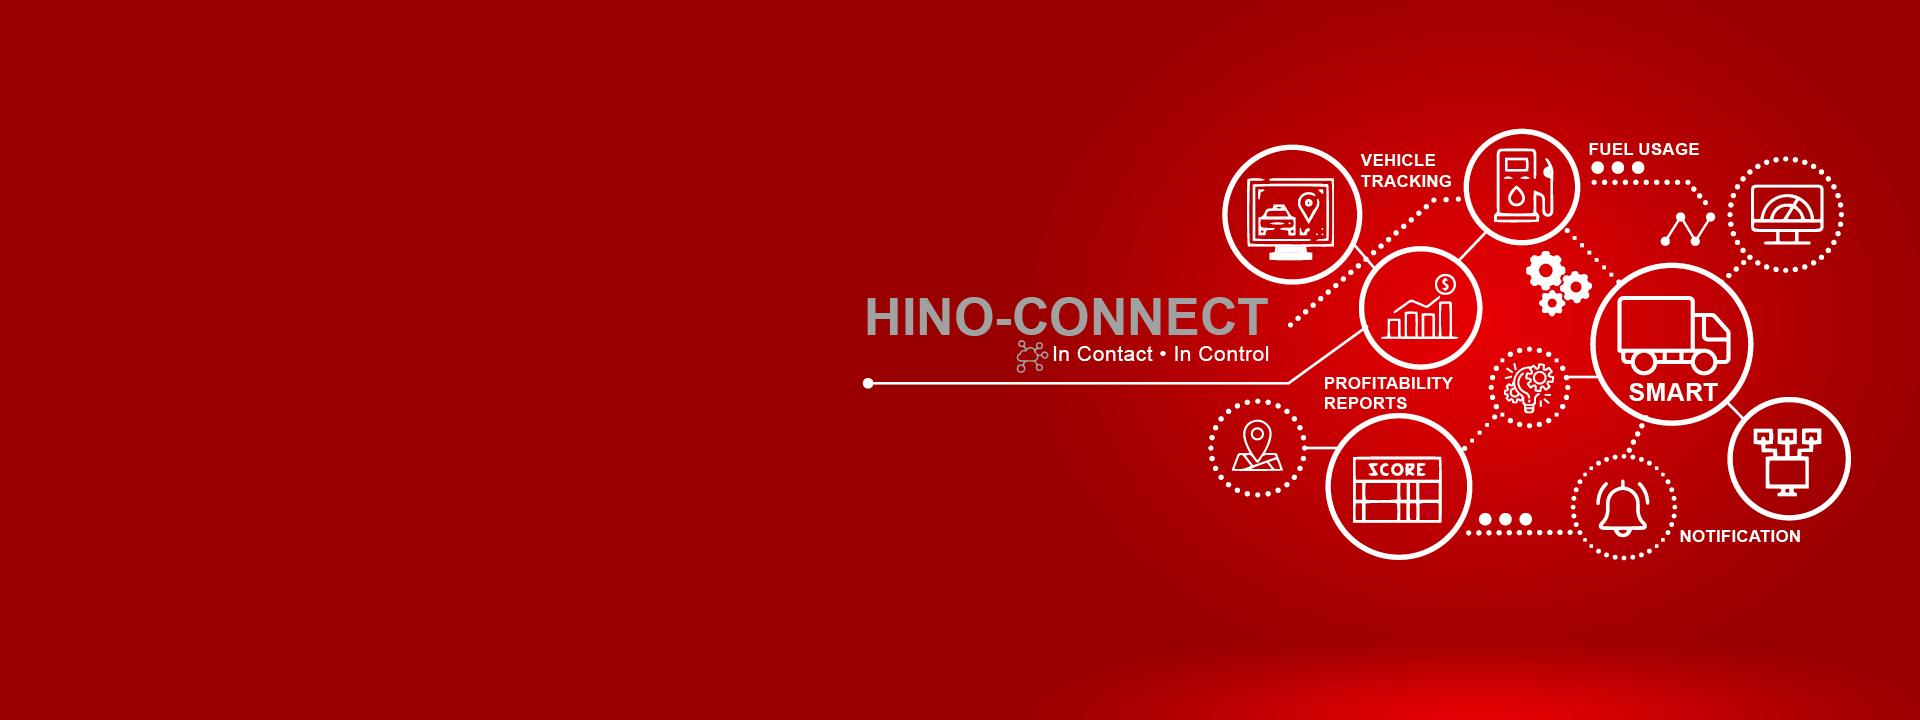 Hino Connect Fleet Management